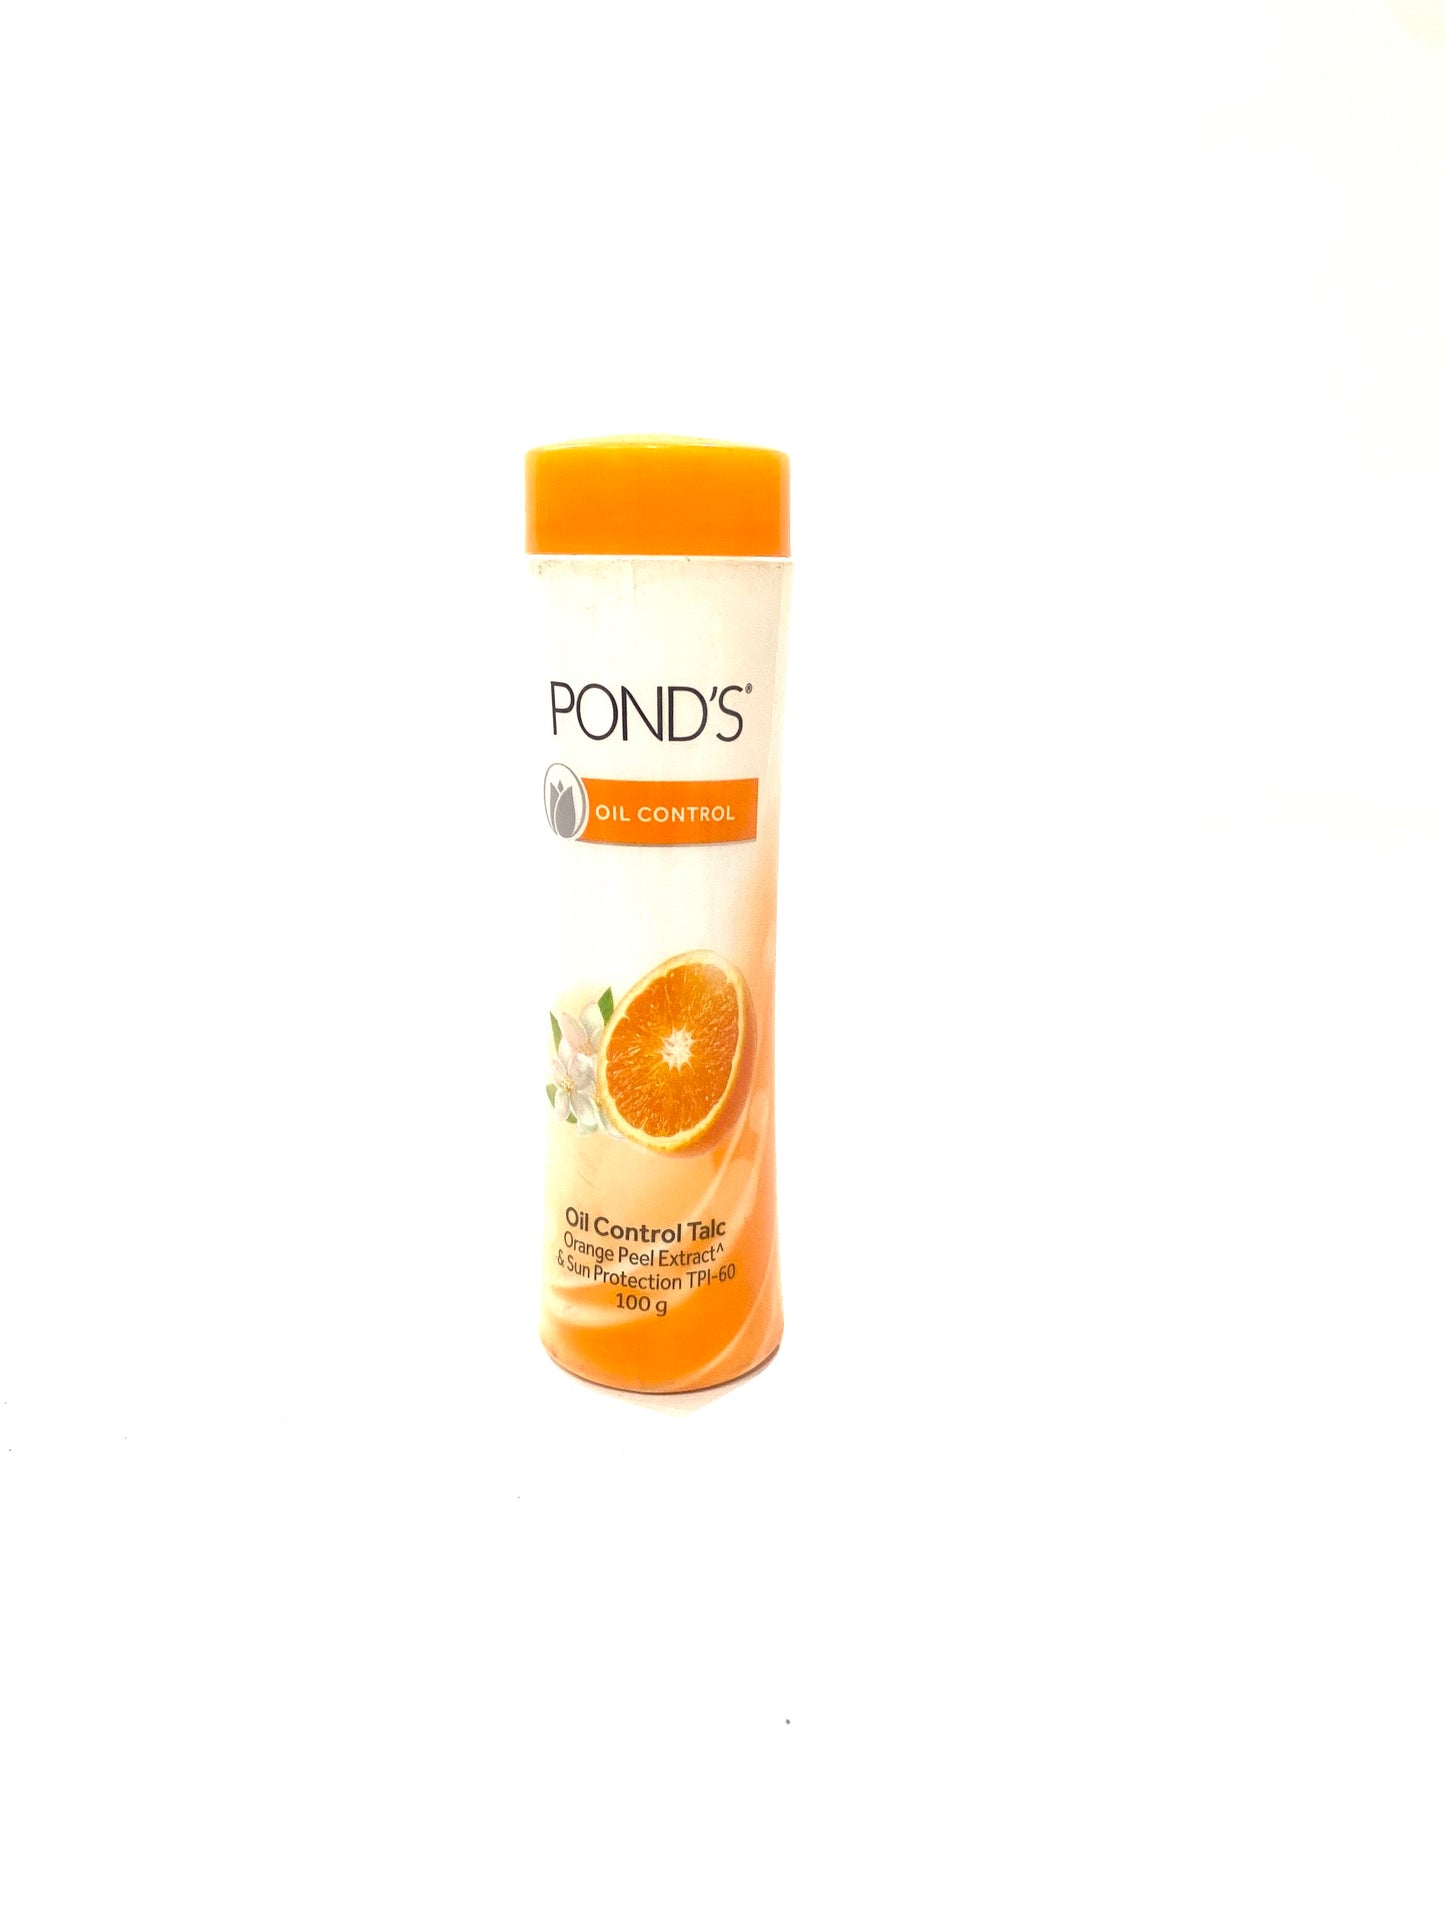 Pond’s Oil Control Talc/ Powder